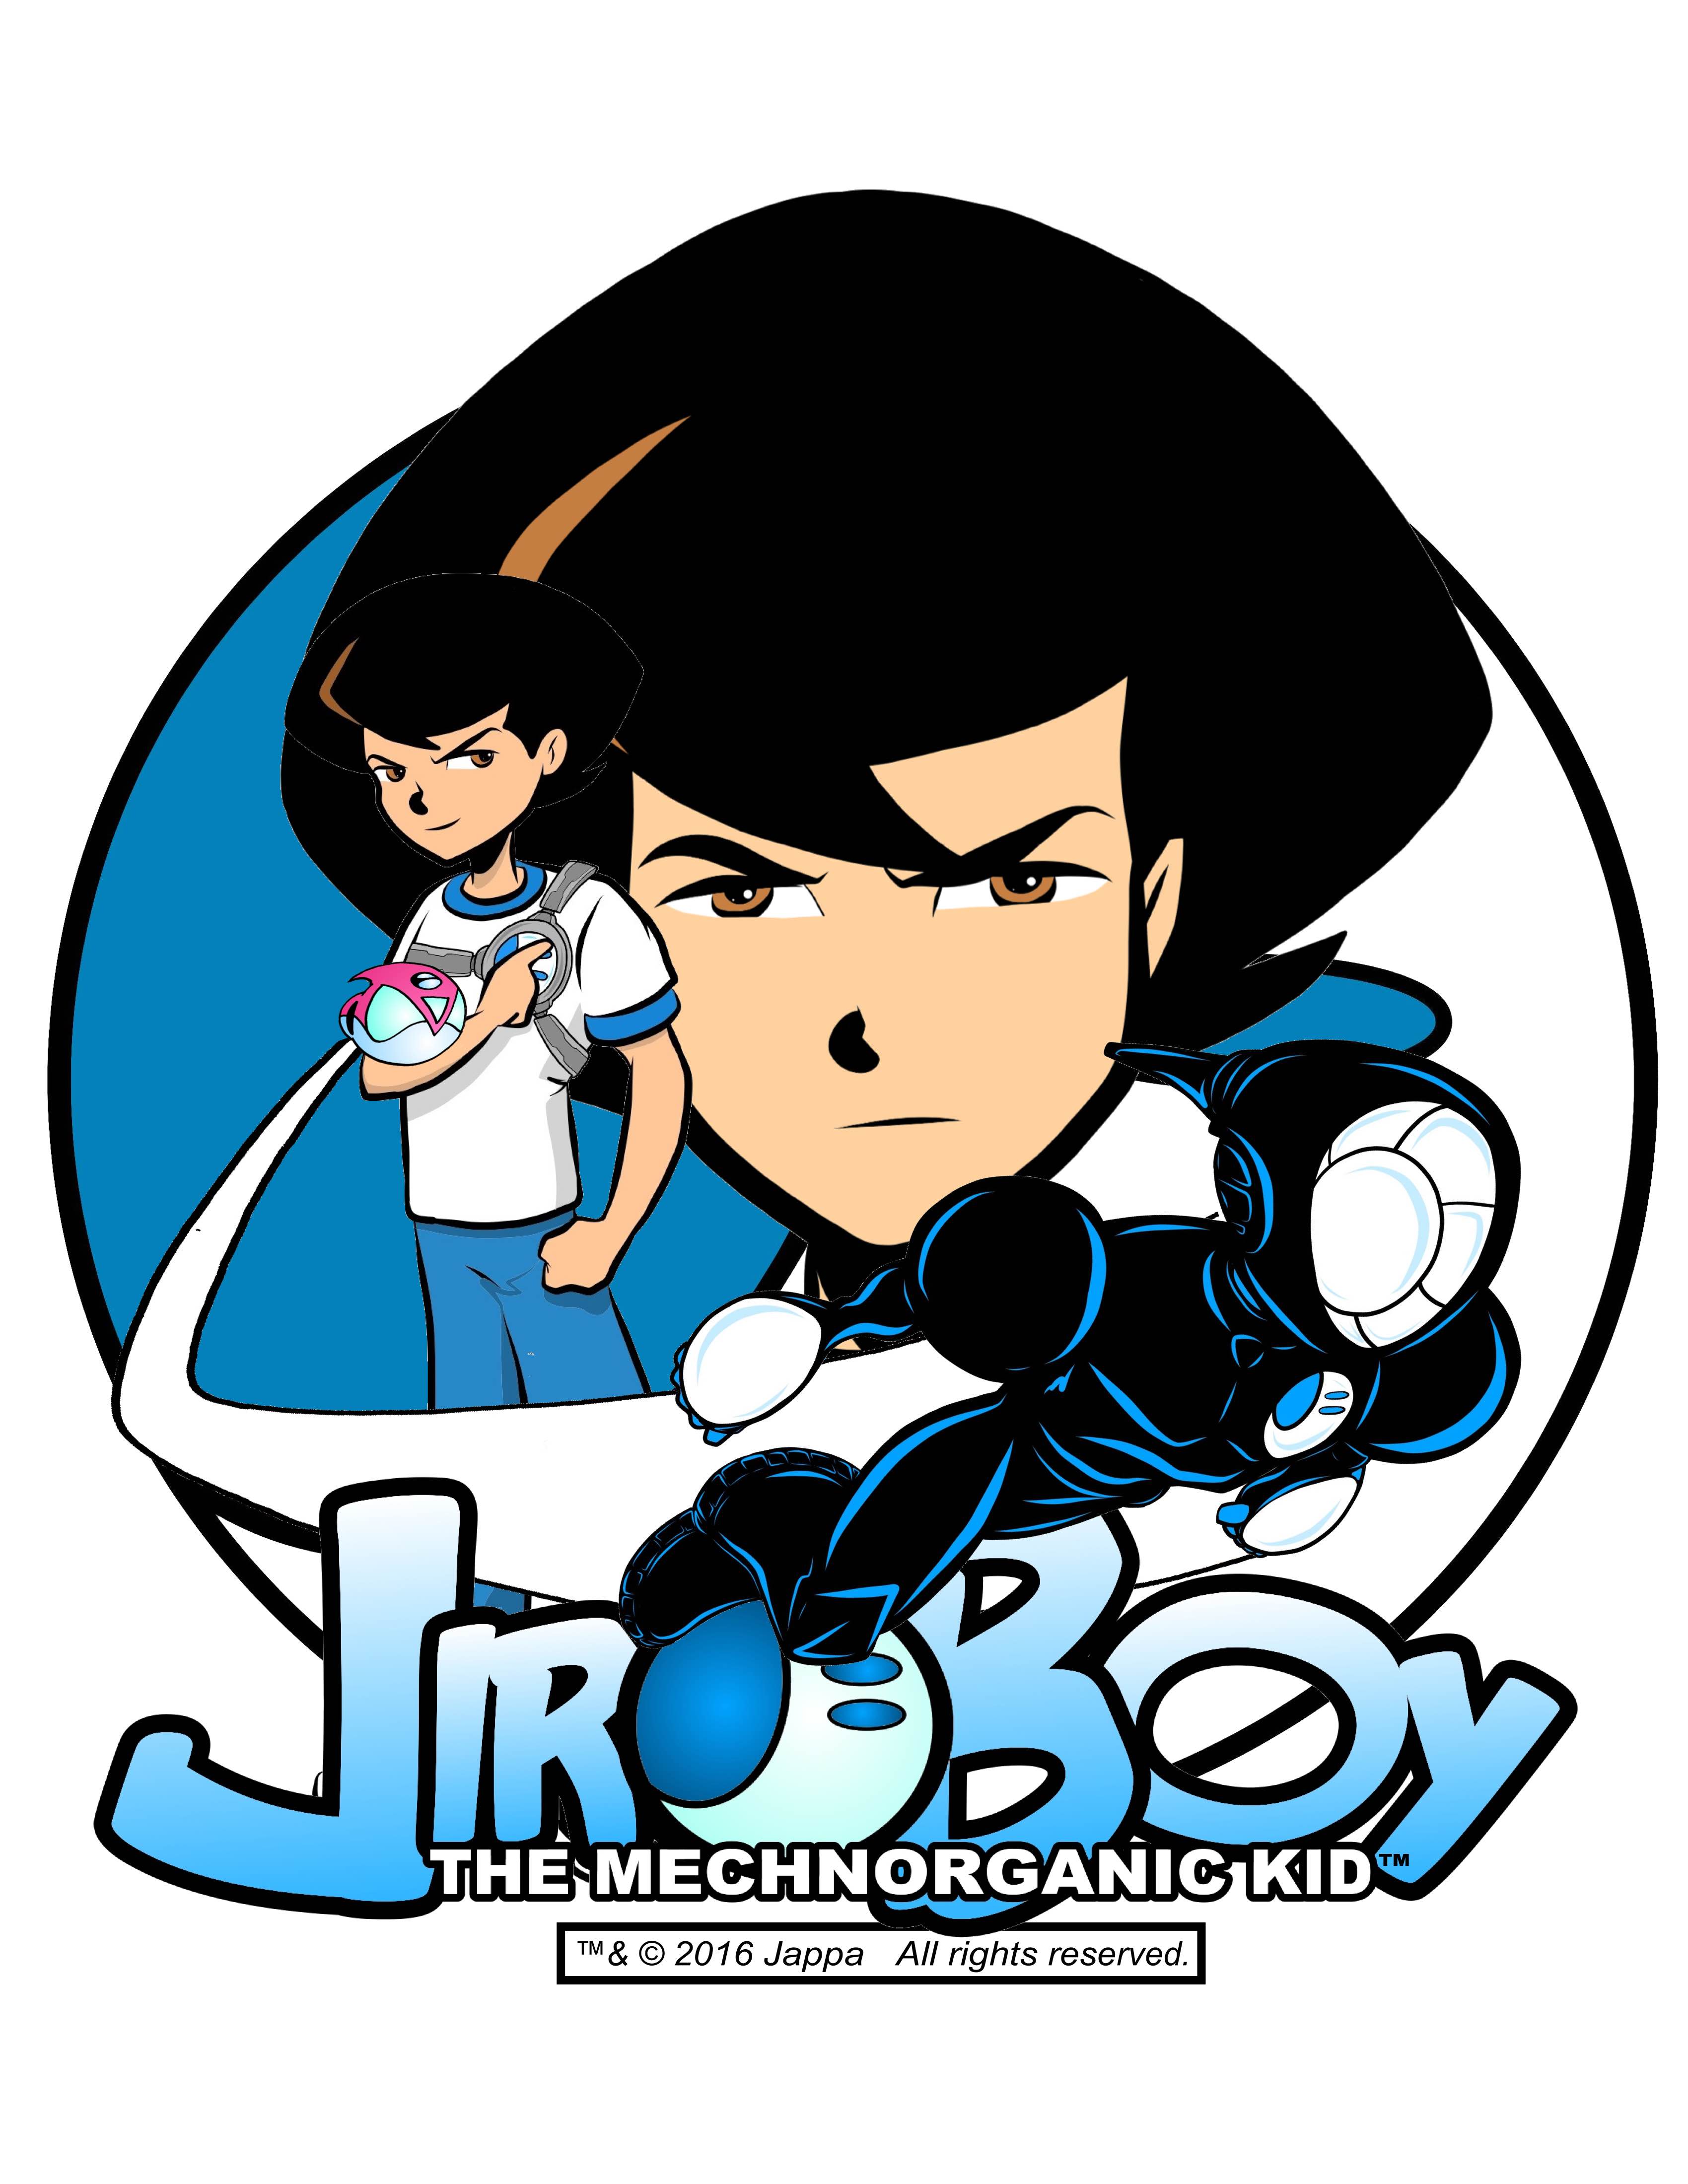 Jiroboy: The Mechnorganic Kid